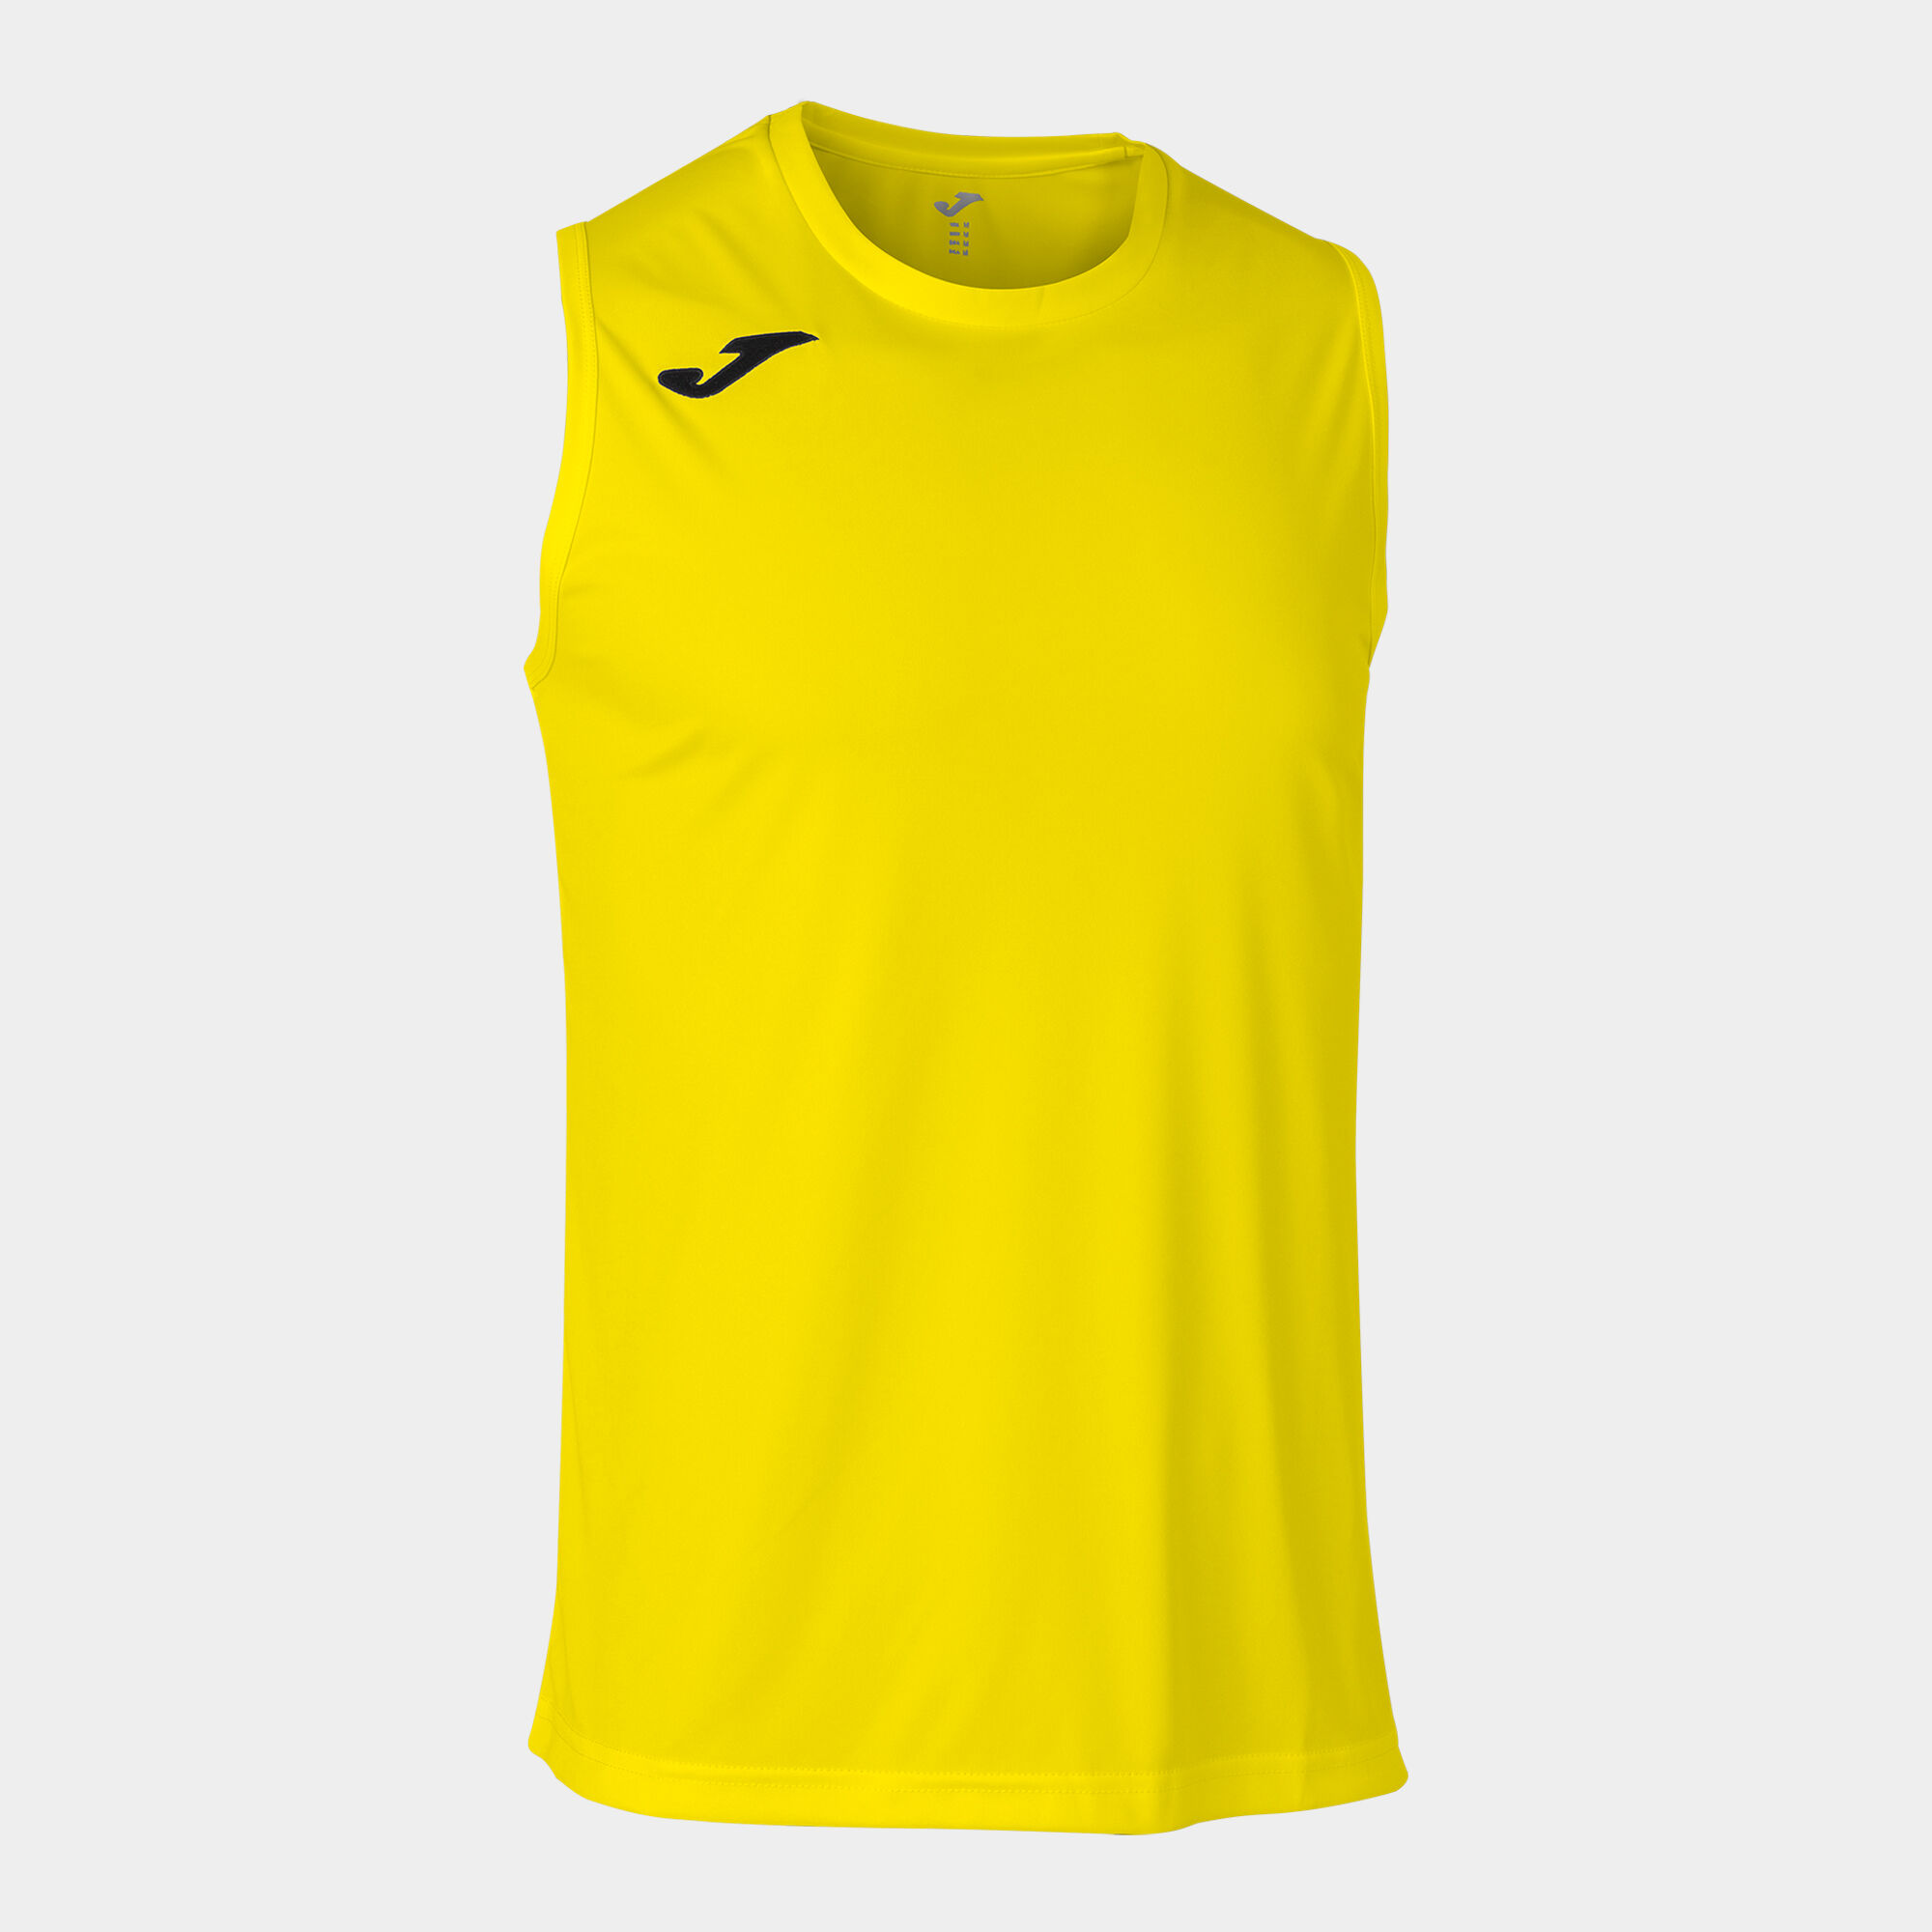 Camiseta sin mangas hombre Combi Basket amarillo